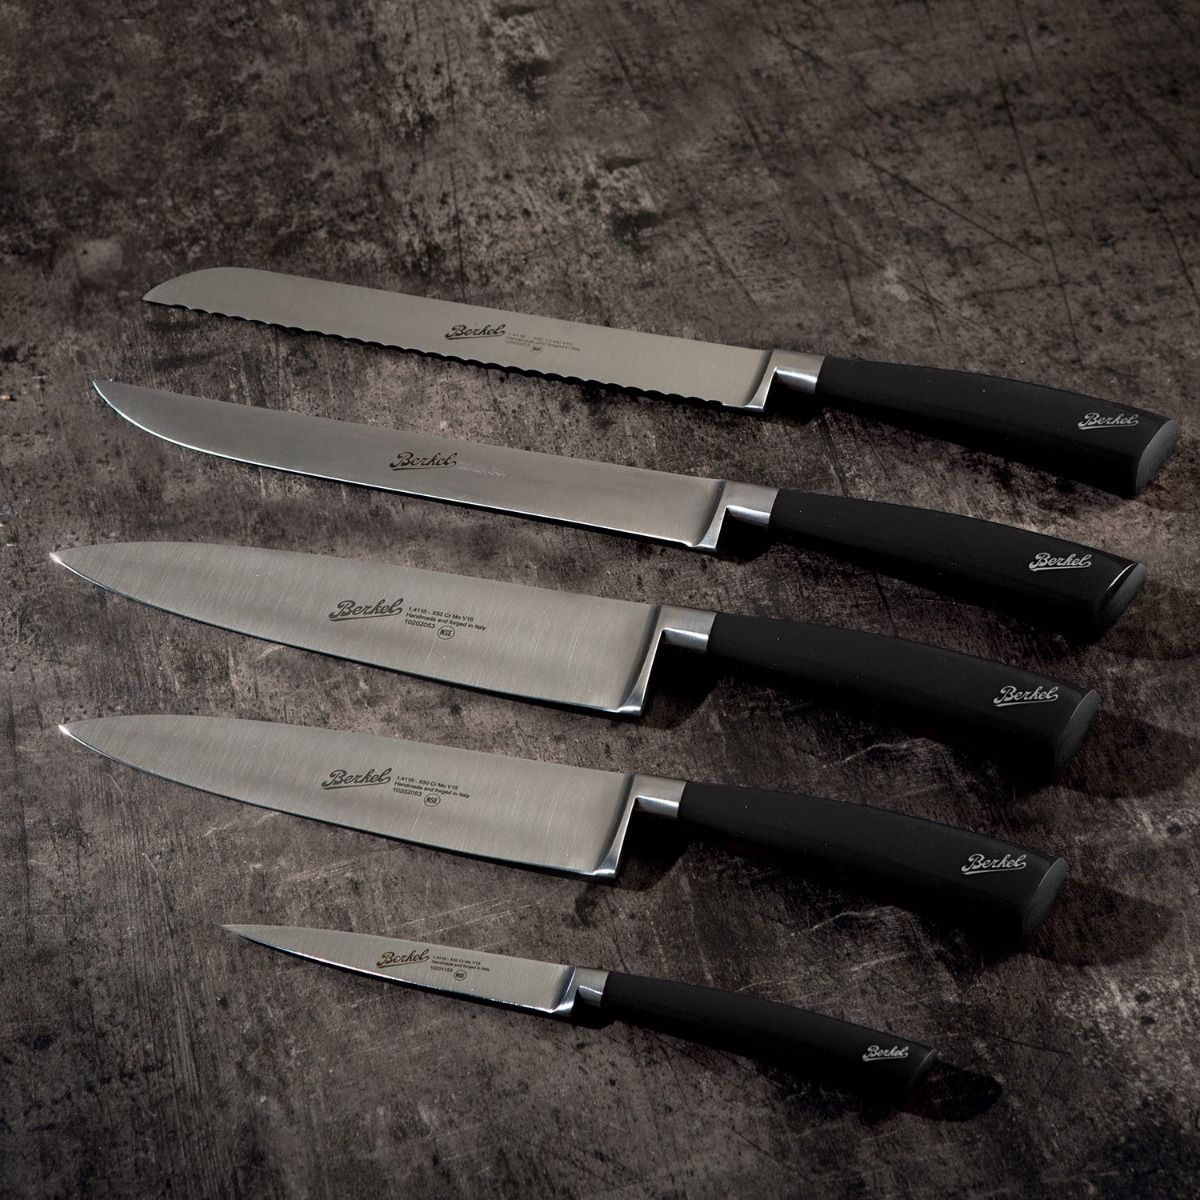 Berkel Block Sense + Set of 5 Elegance knives